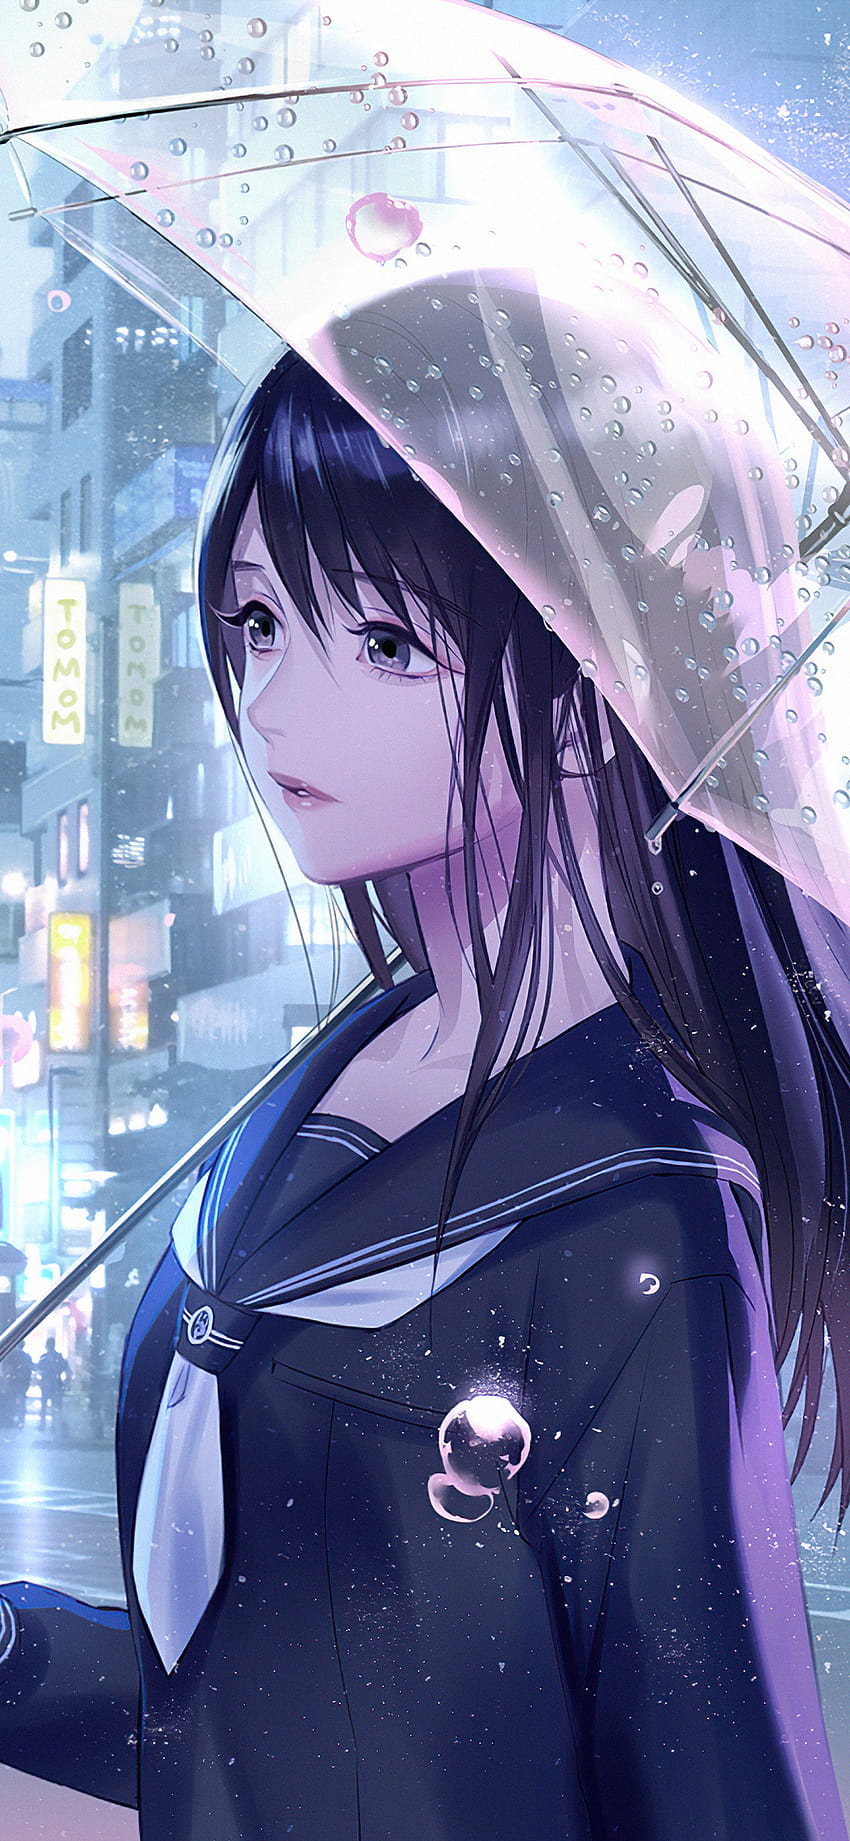 Anime Girl In Rain With Umbrella Style Colorful Art Print Framed Shadowbox  | eBay